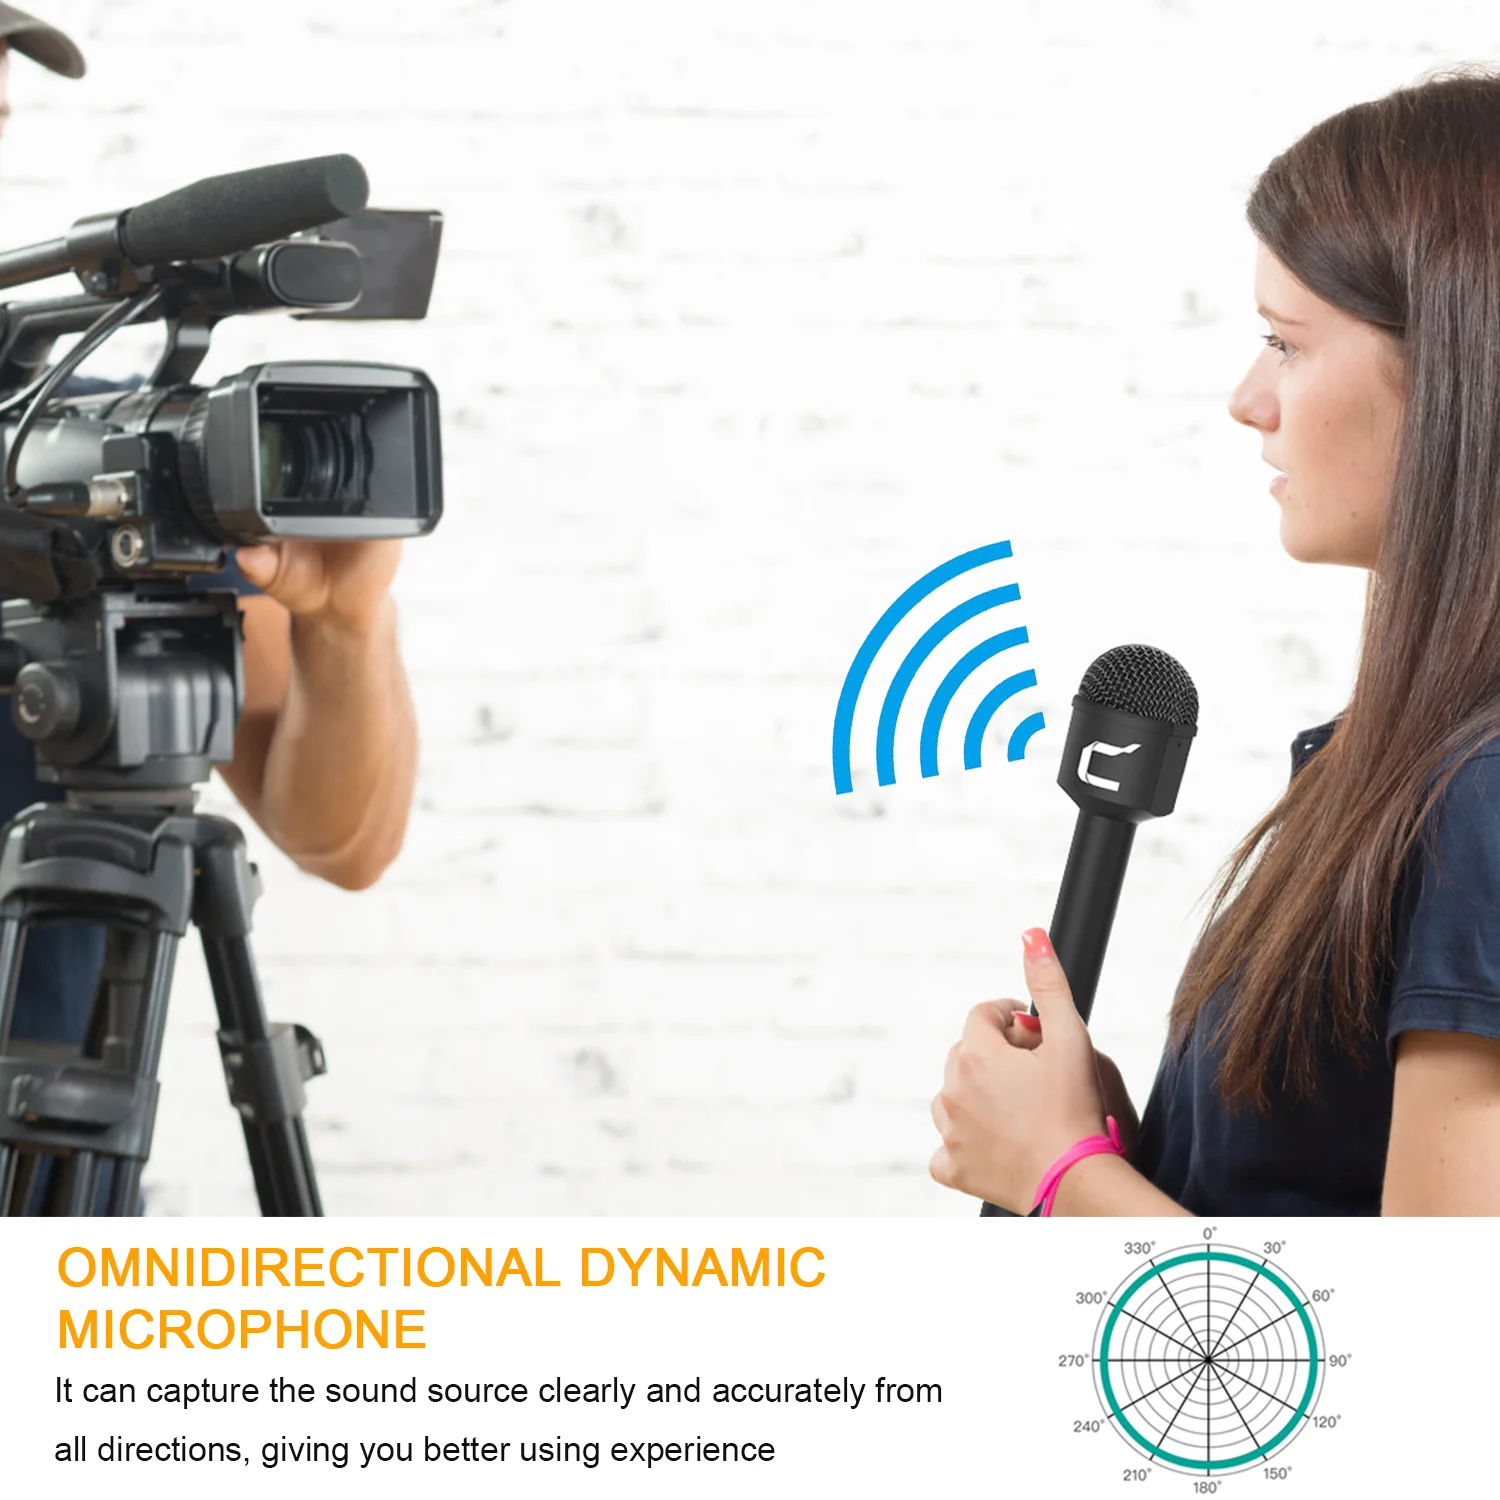 Comica HRM-C Handheld Dynamic Omni Microphone XLR Interview Mic for DSLR Cameras Camcorder Smartphone Report Presentation Speech enlarge